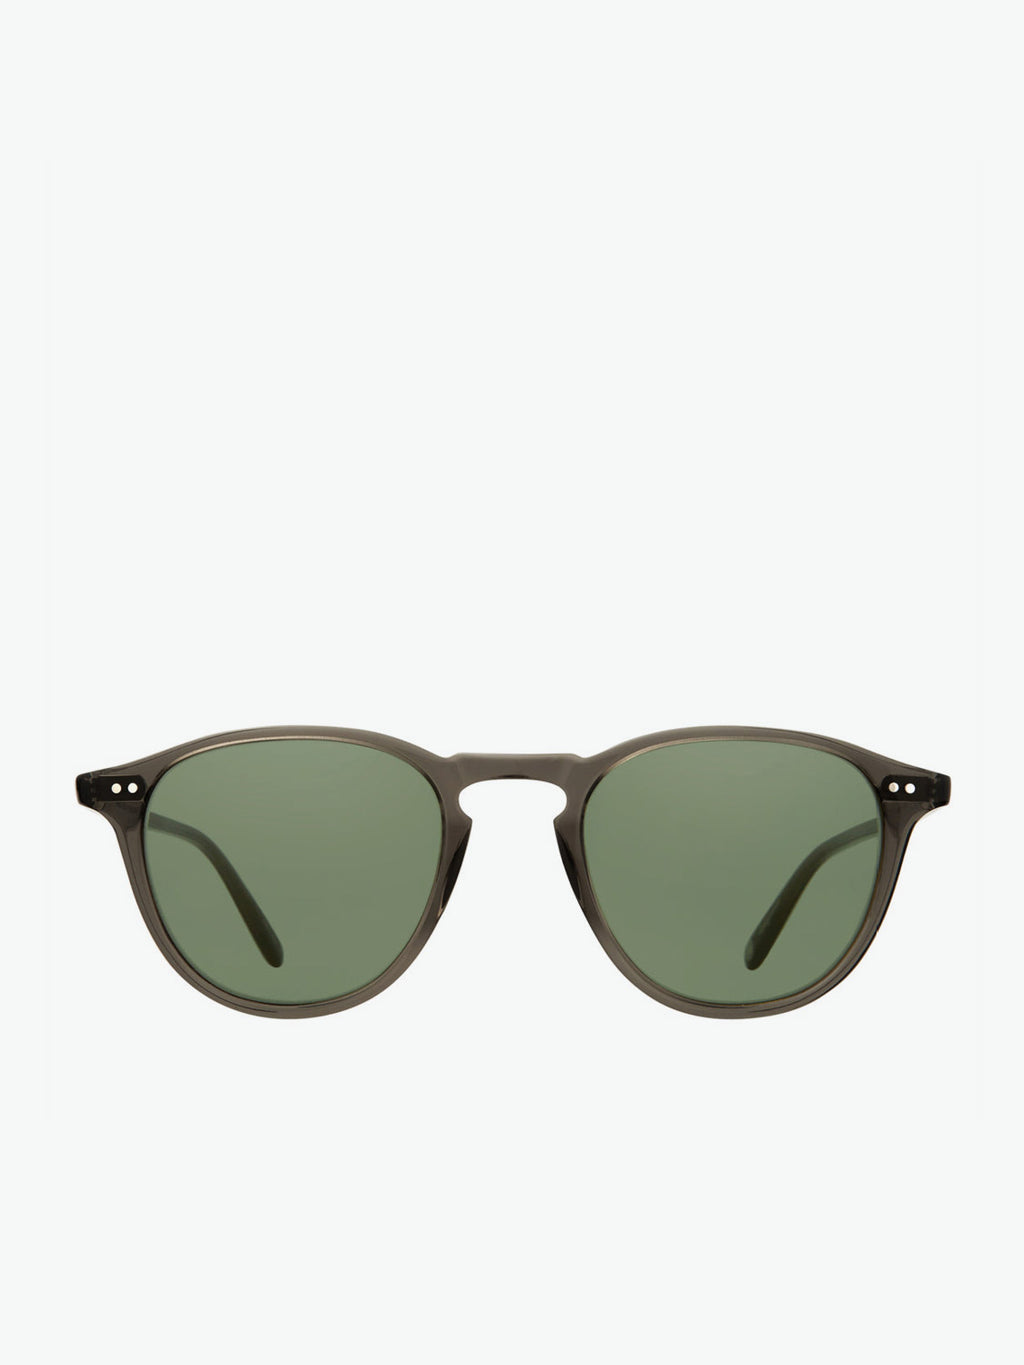 Garrett Leight Square Charcoal Sunglasses | A